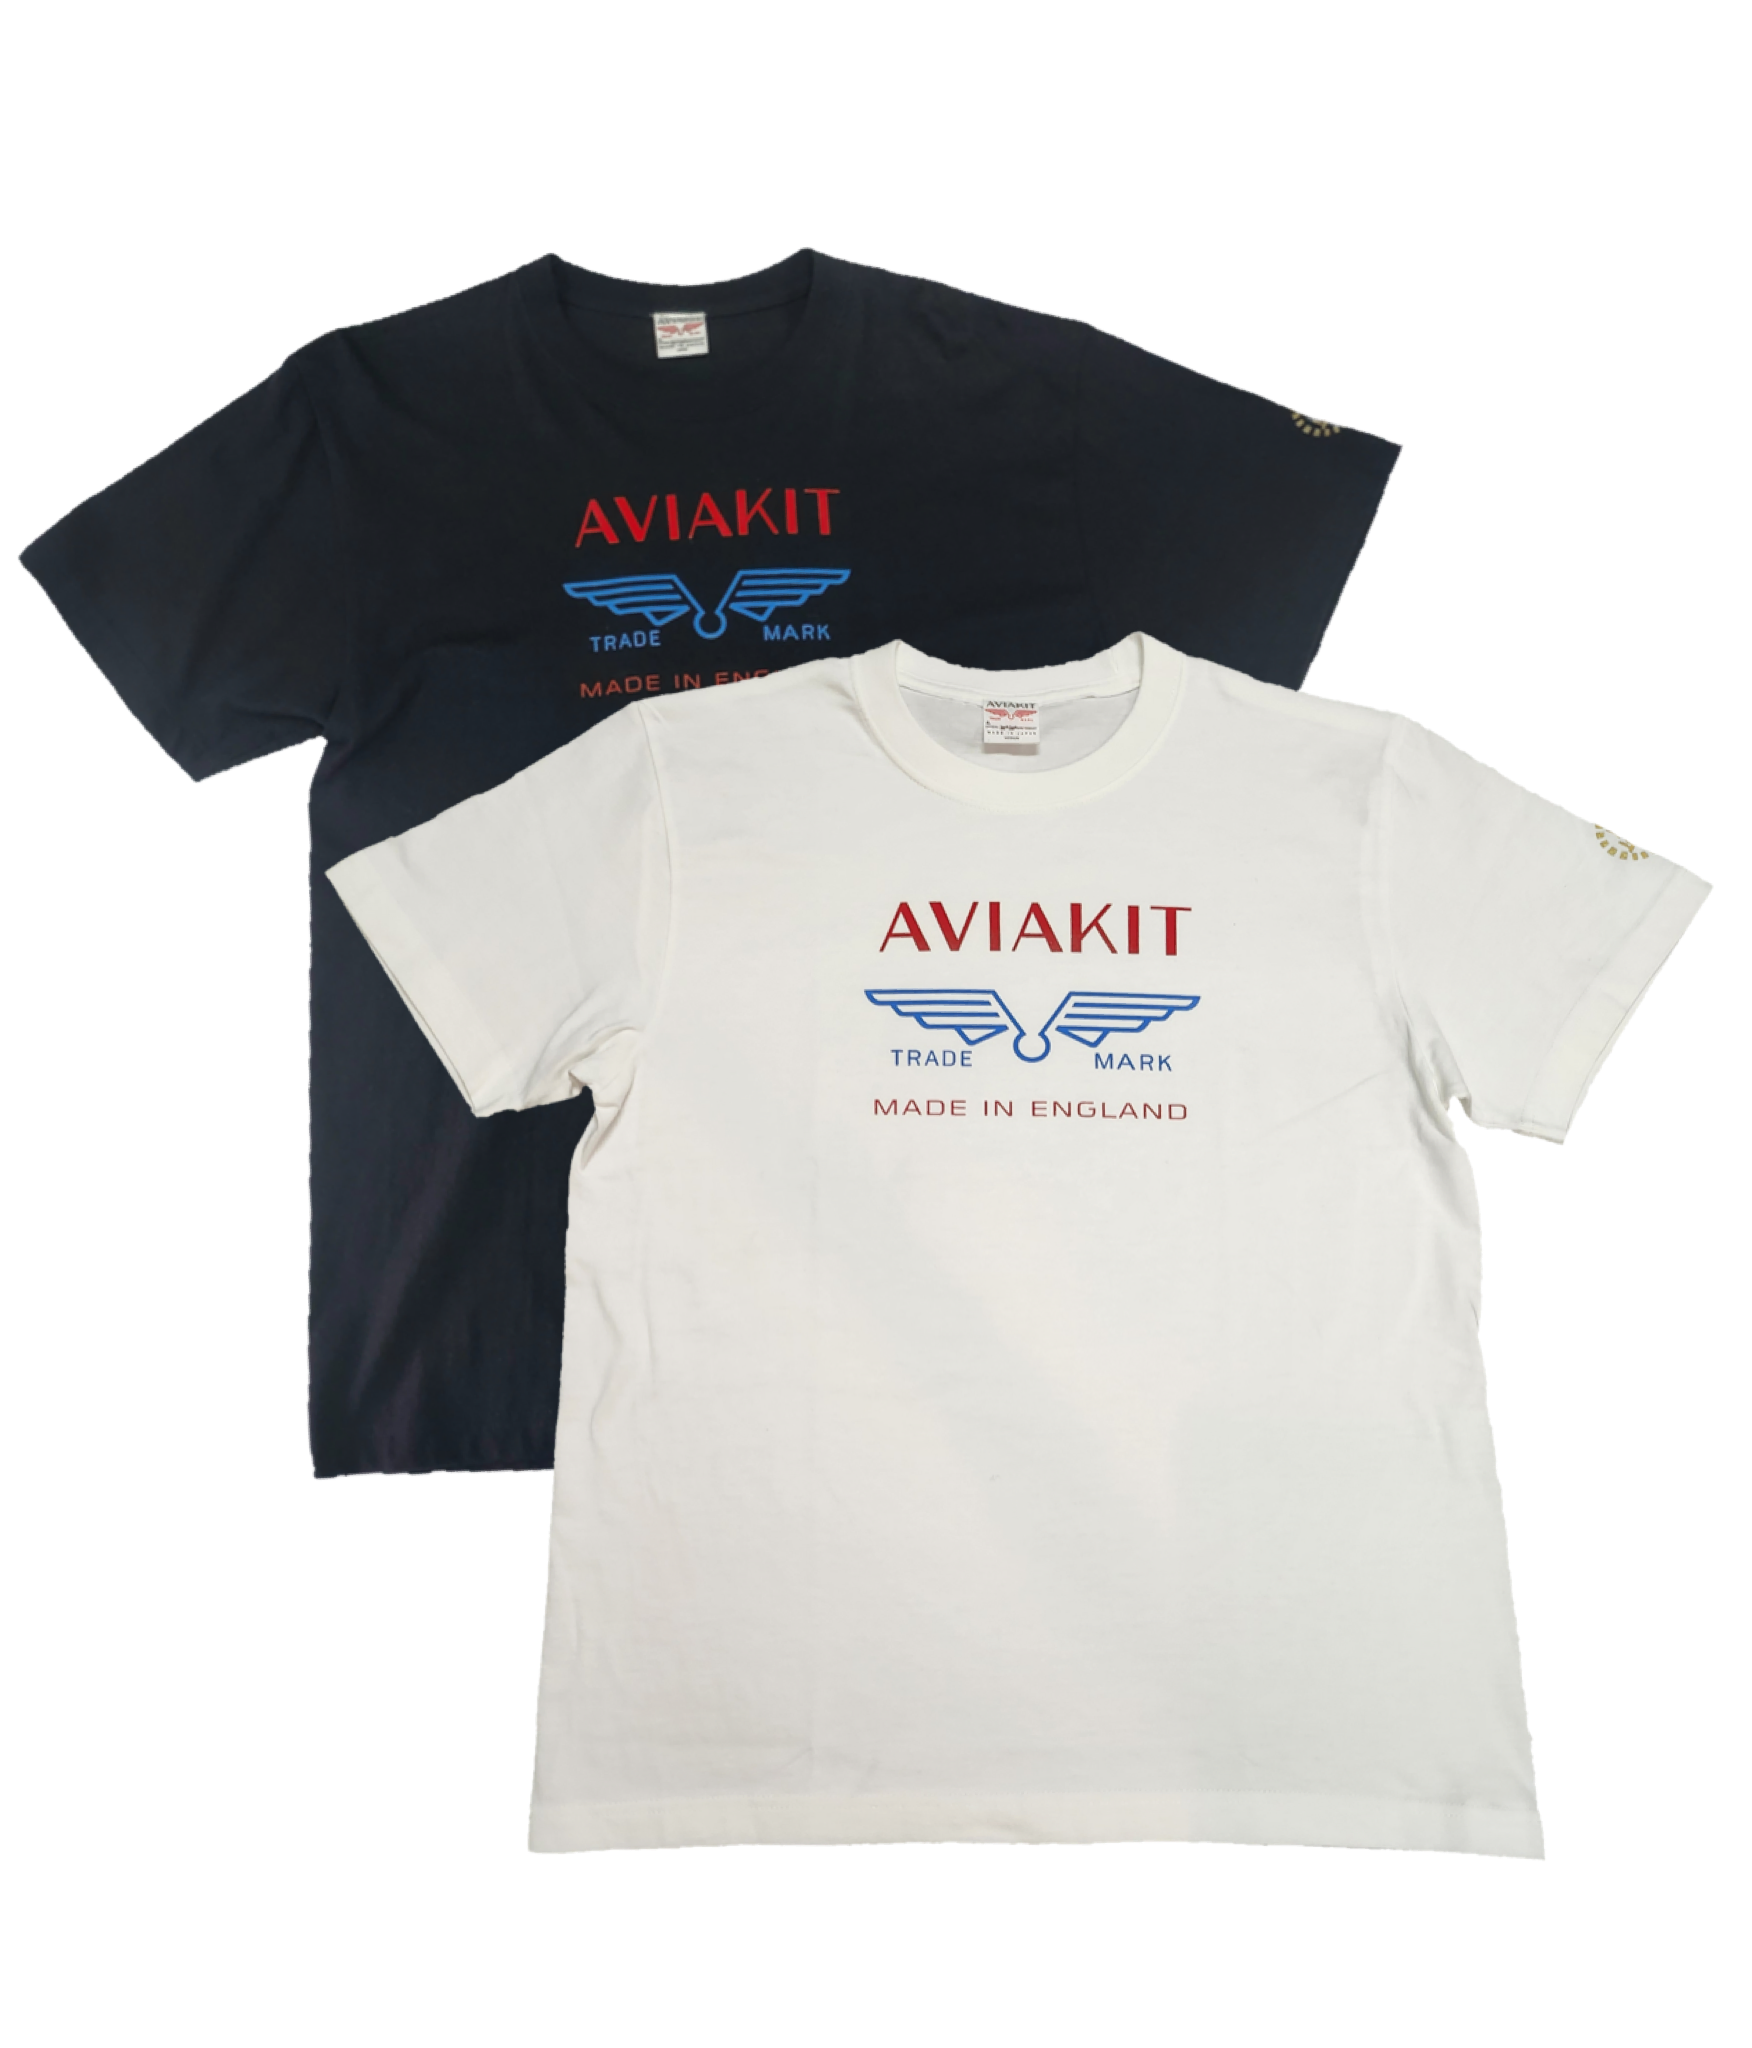 70s AVIAKIT Wing Logo T-shirt